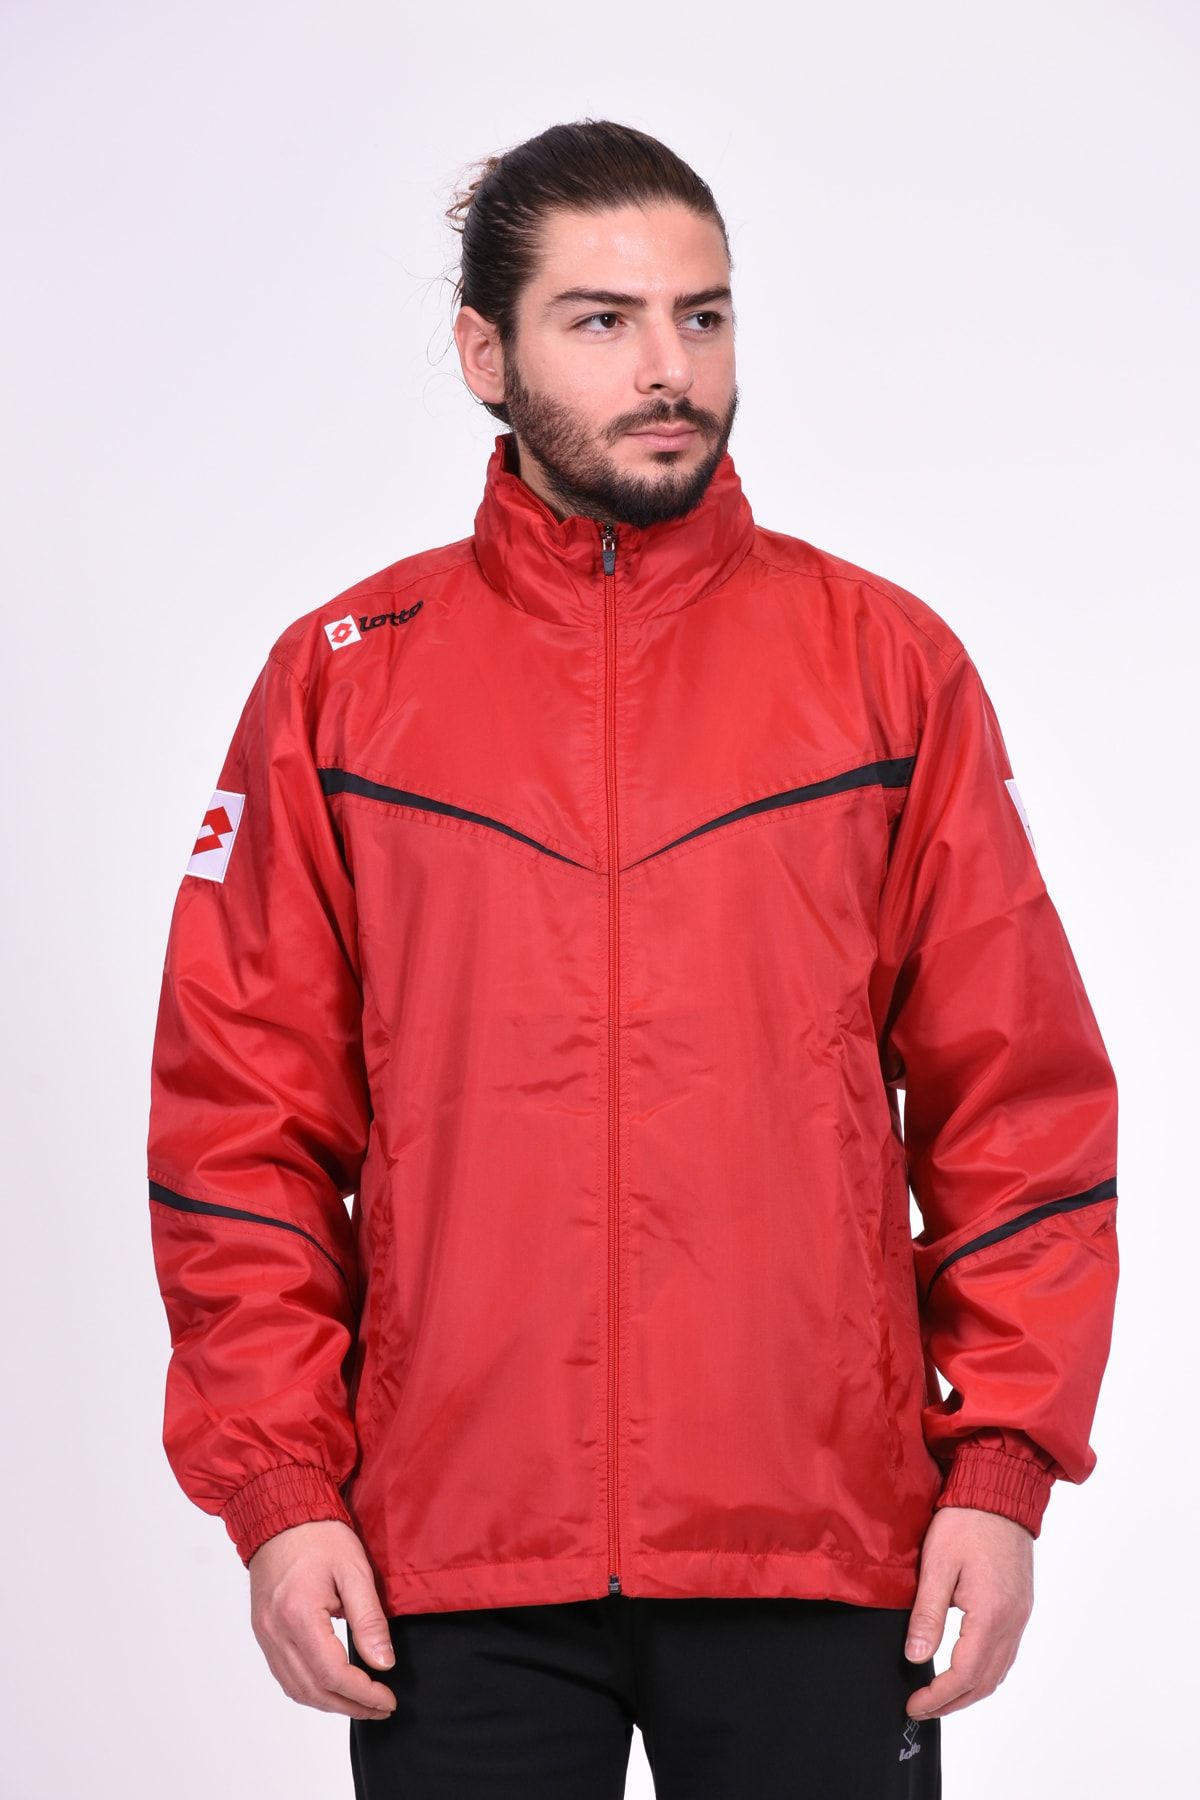 Lotto Yağmurluk&rüzgarlık Erkek Guıdo Jacket Team Wn Wp N8158 Kırmızı-siyah